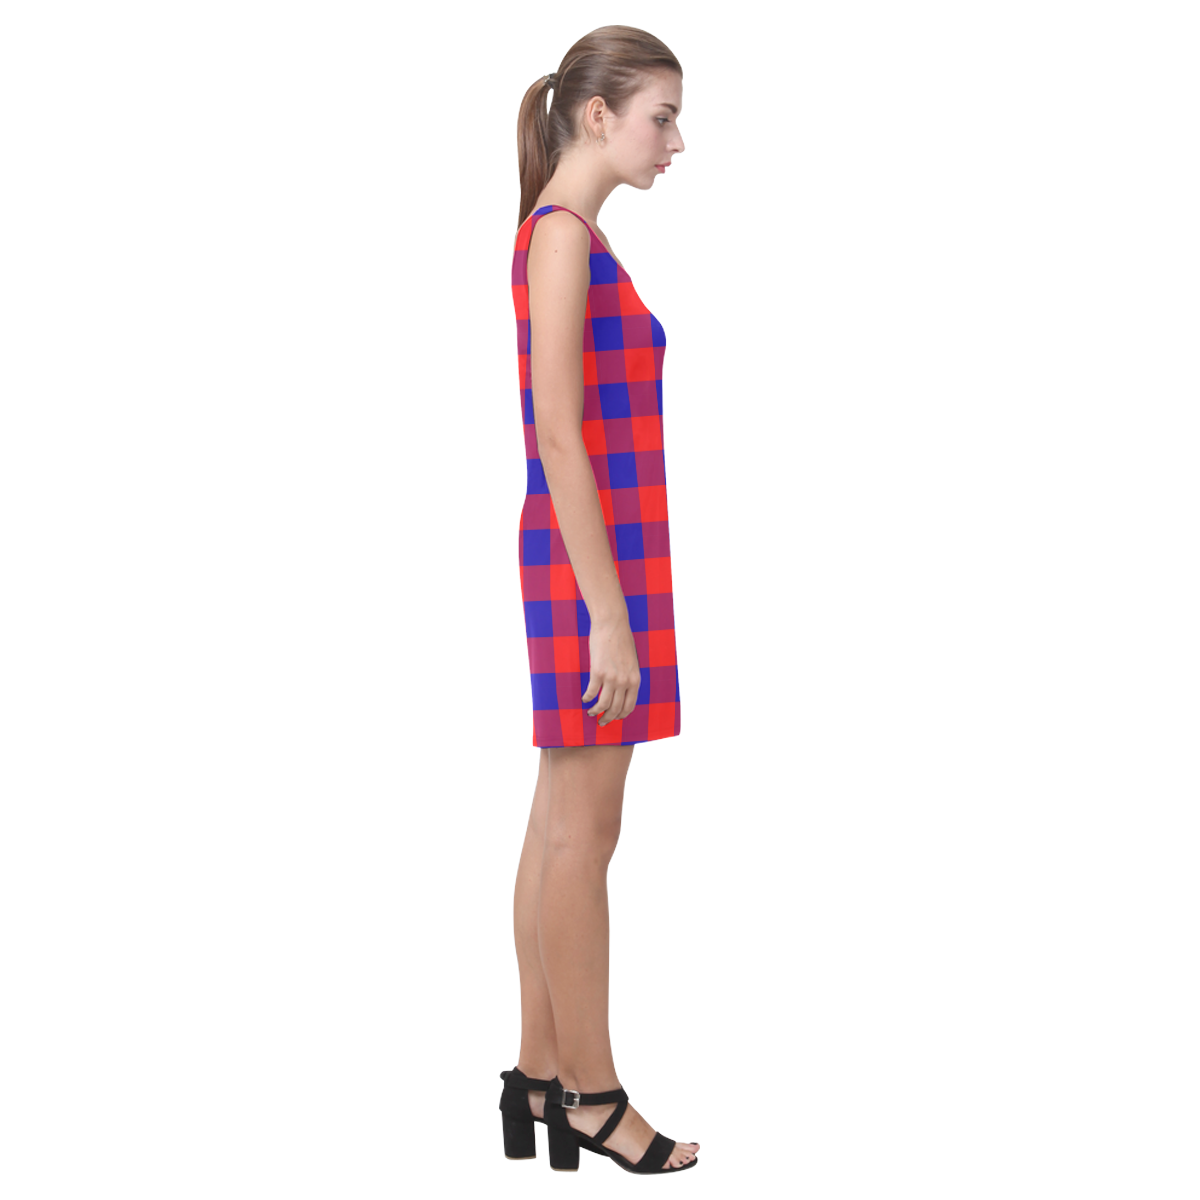 Red and Blue Checkered Medea Vest Dress (Model D06)